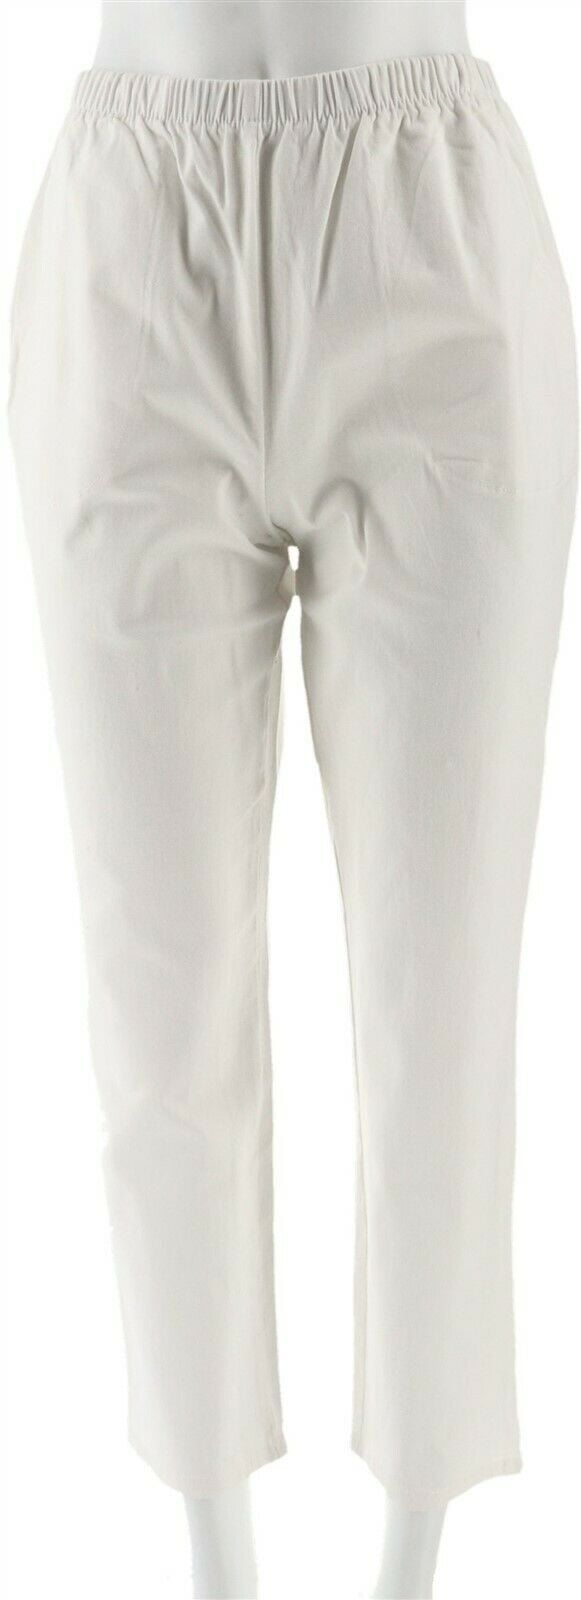 denim & co original waist stretch pants